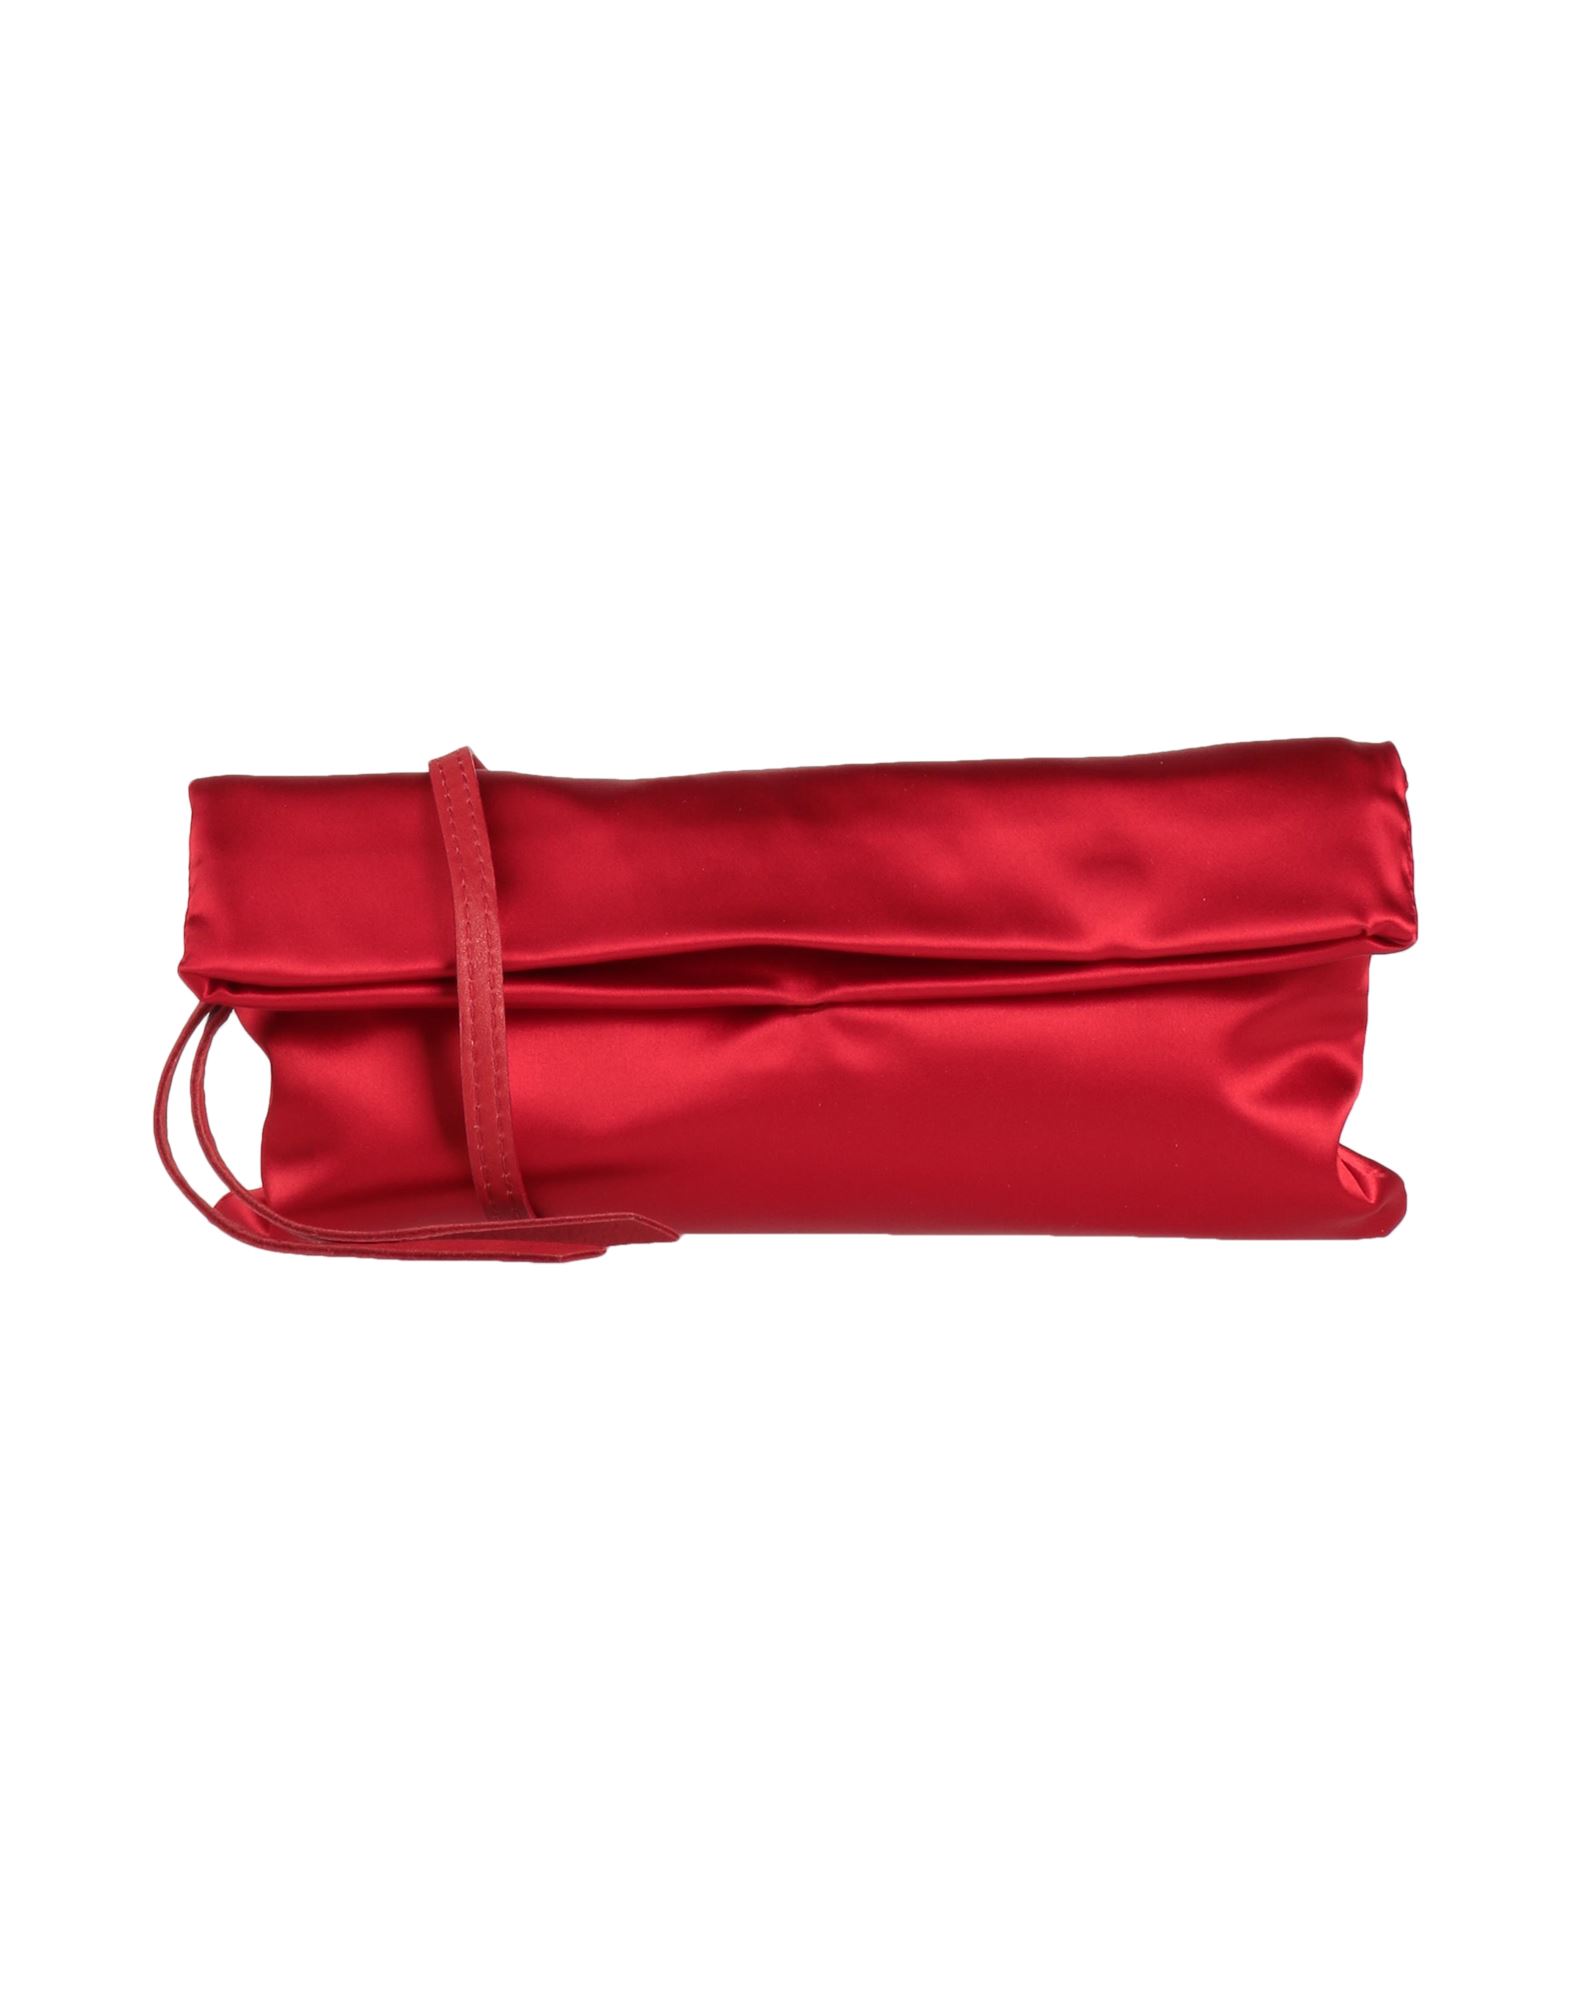 Tosca Blu Handbags In Red